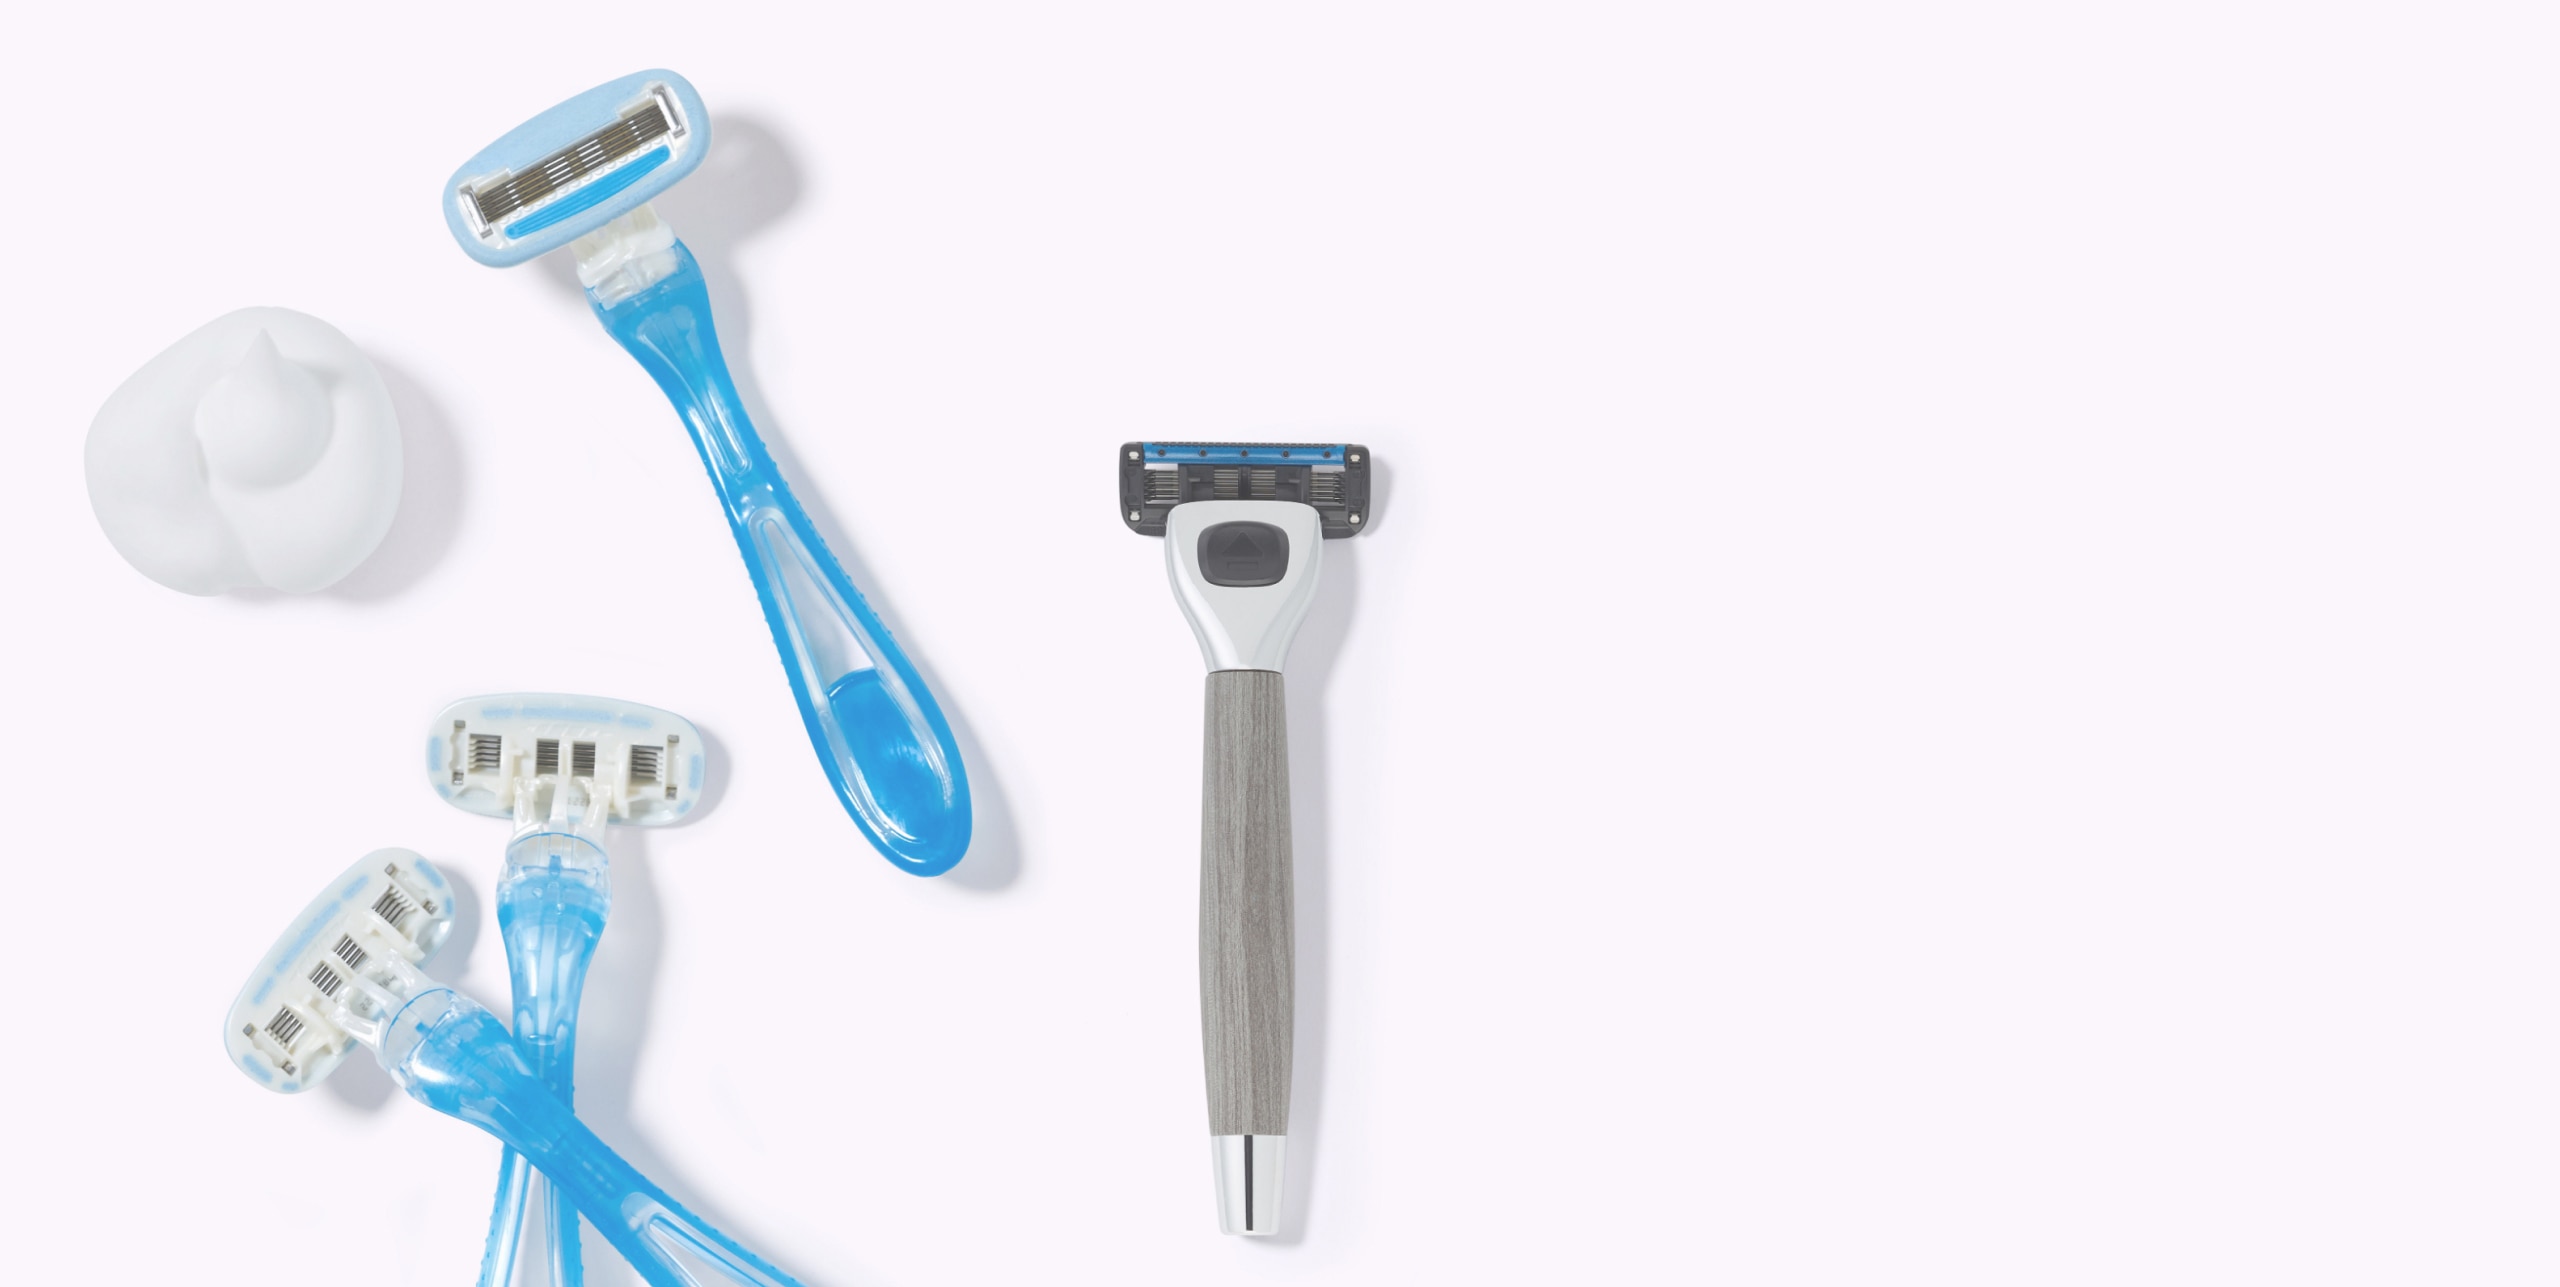 Women's razors placed next to men's razors to highlight price equity